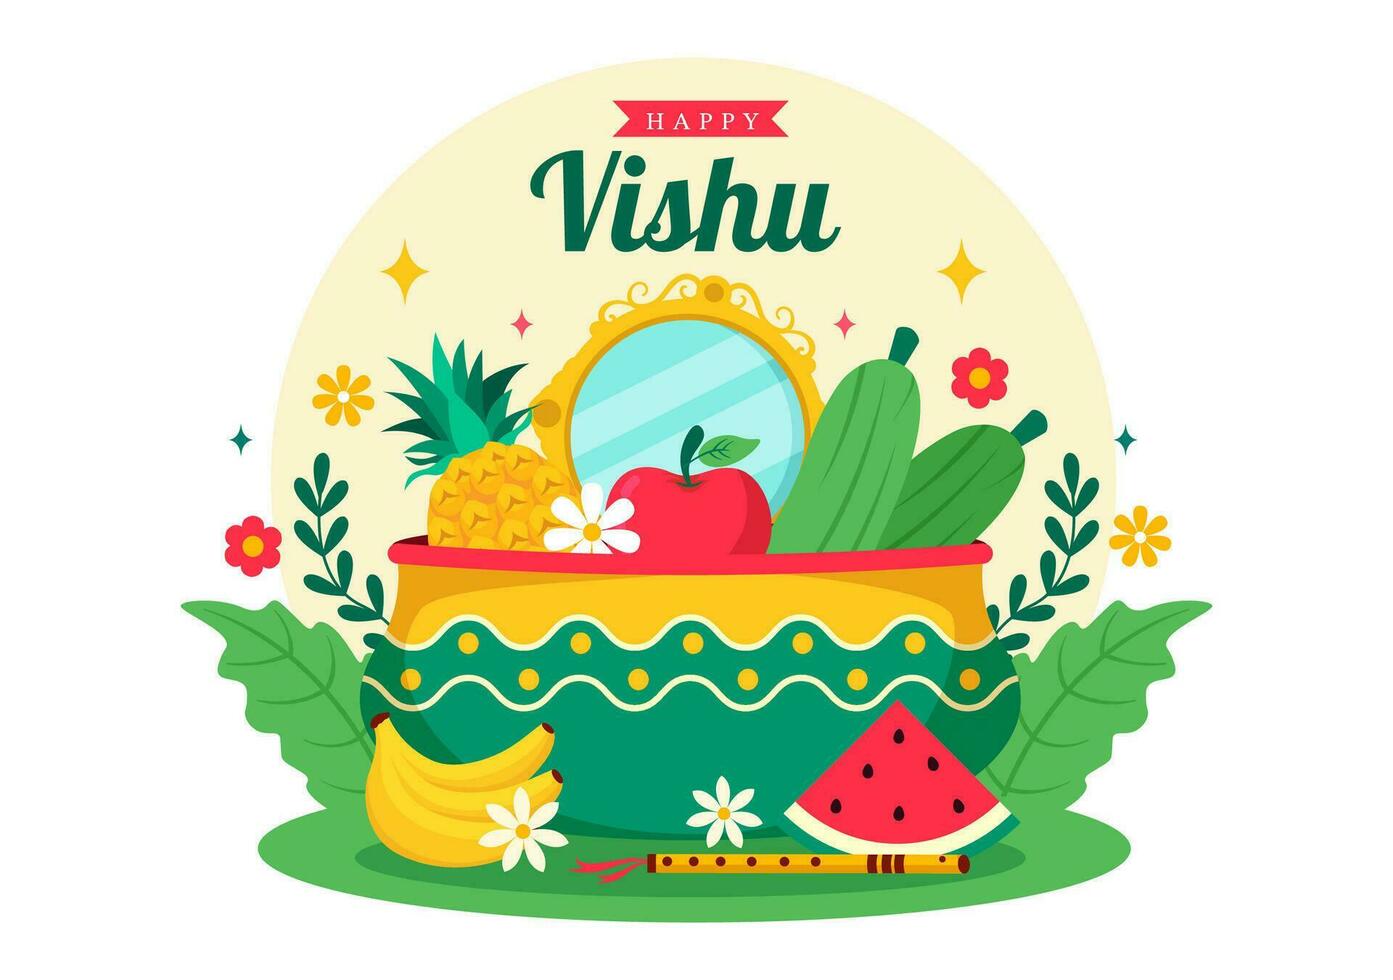 Happy Vishu Festival Vector Illustration with Krishna,Traditional Kerala Kani, Fruits and Vegetables in National Holiday Flat Cartoon Background